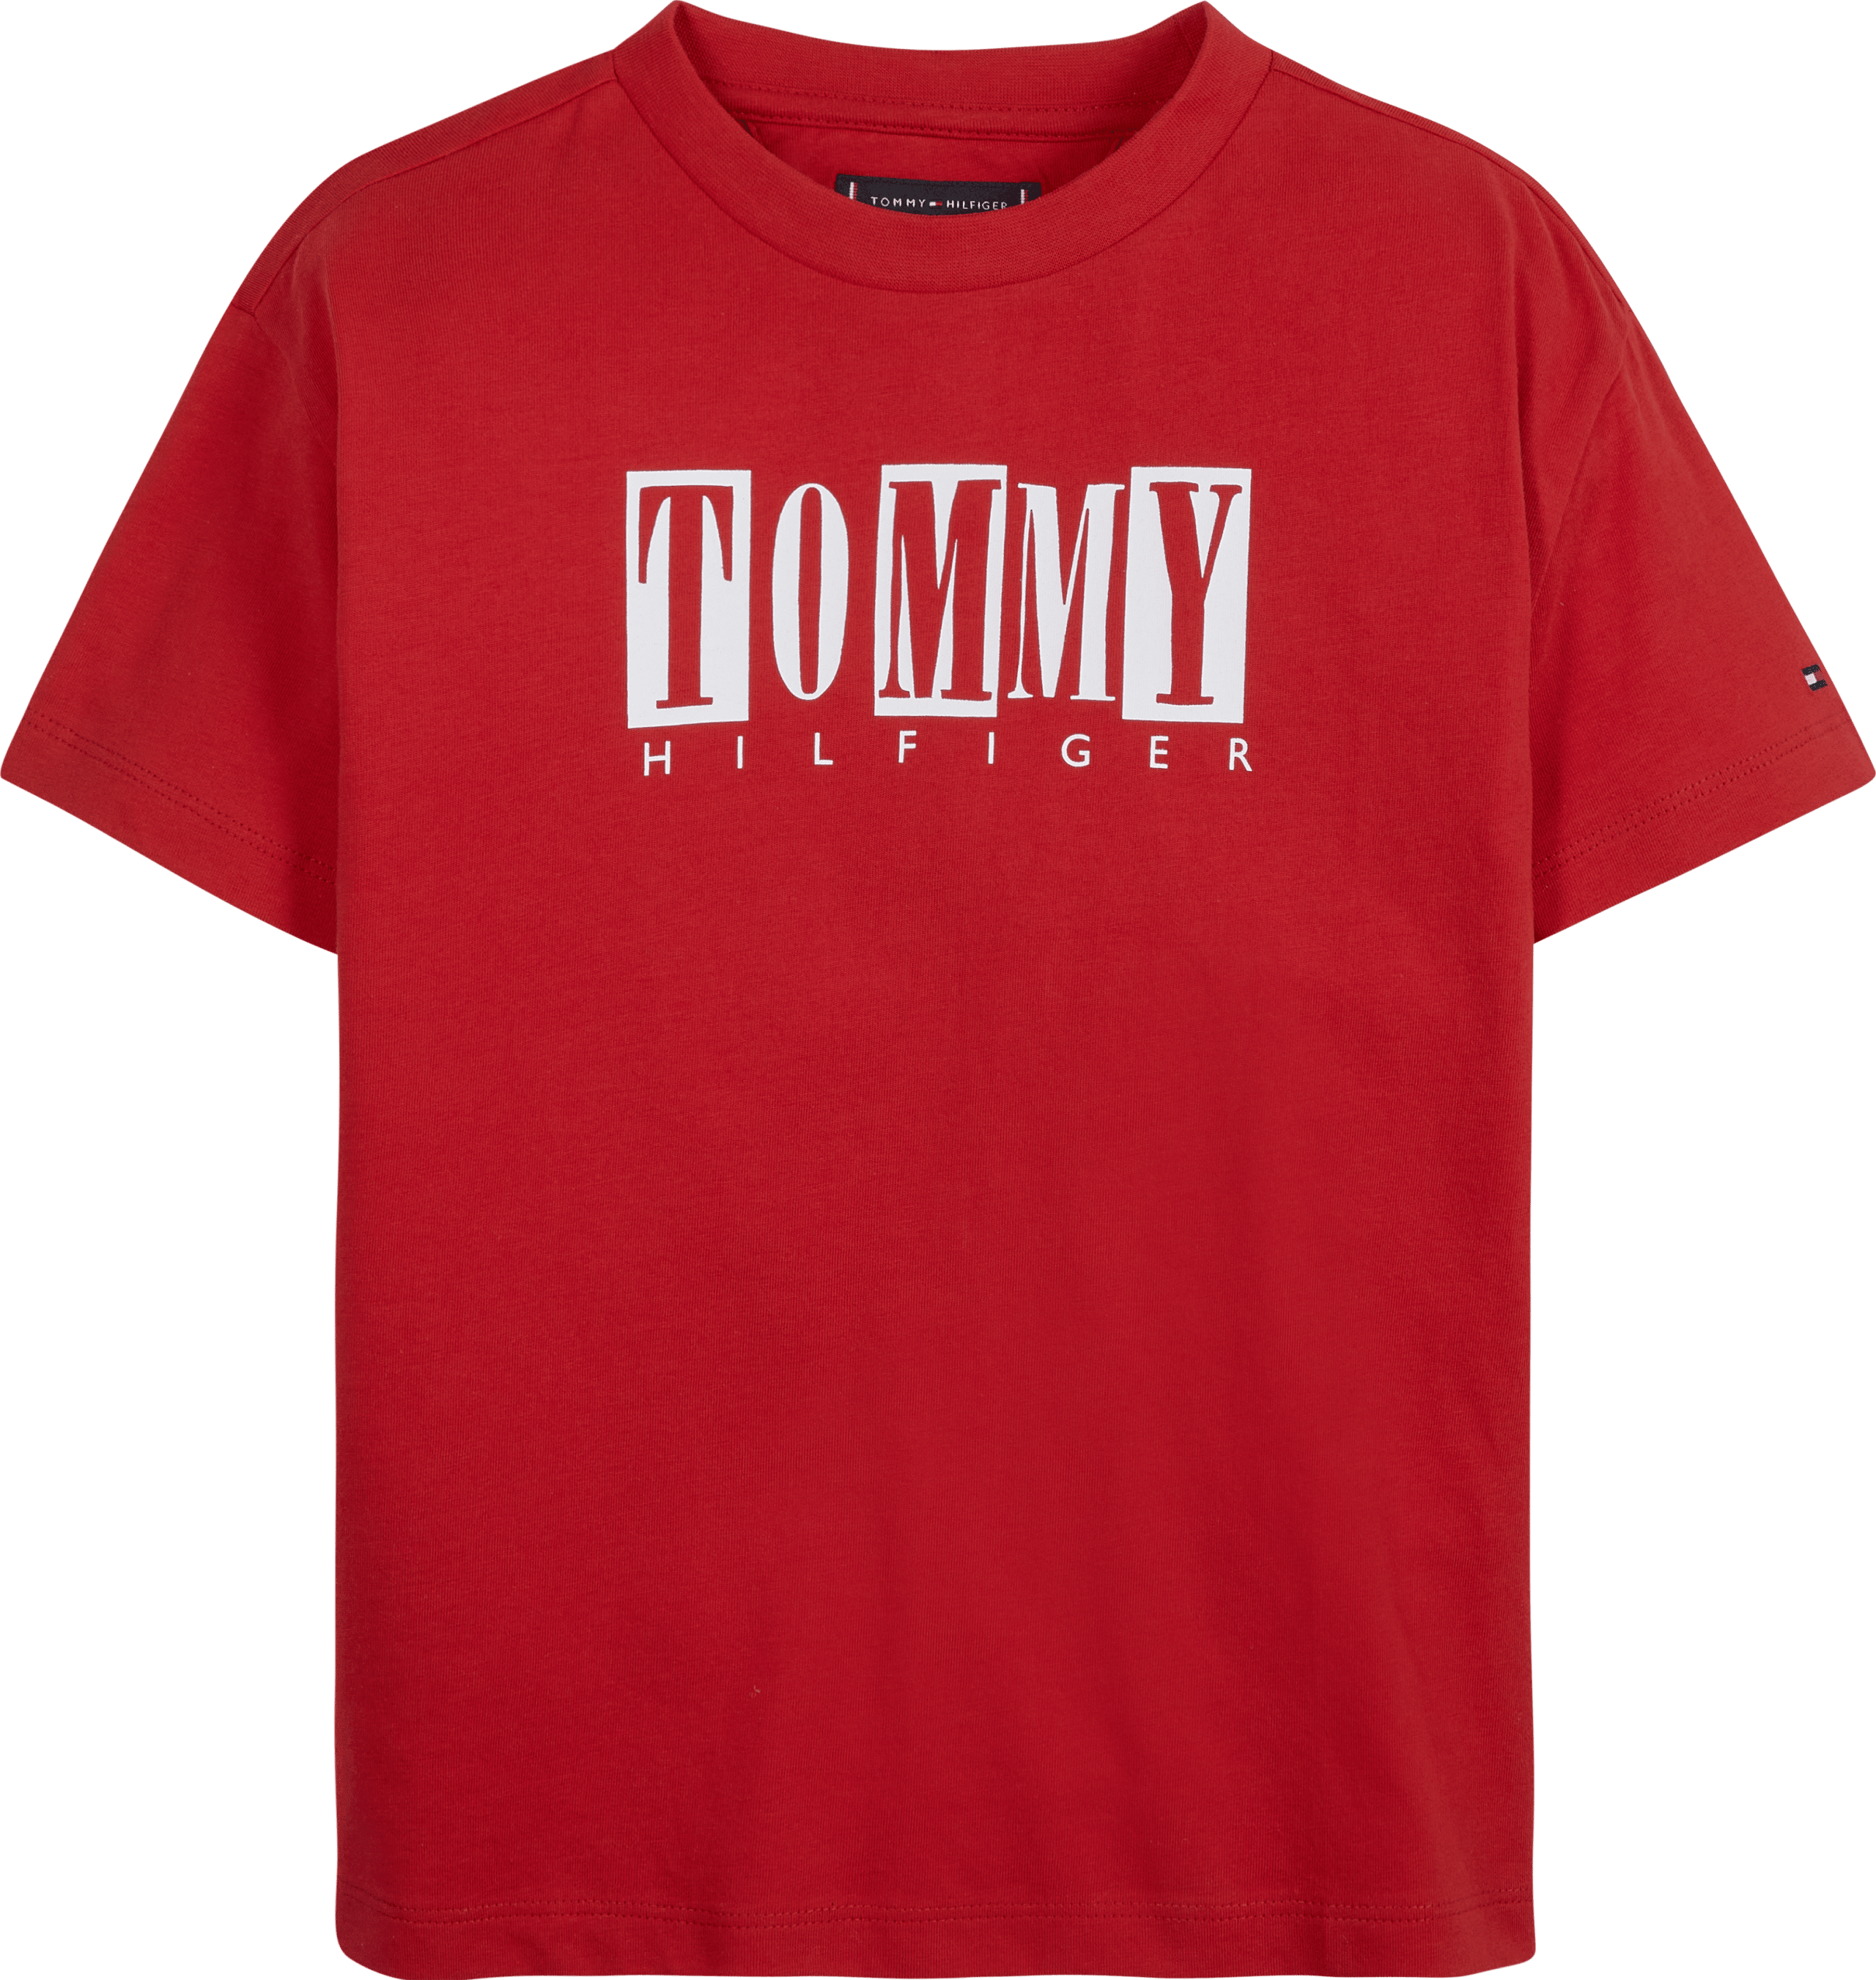 TOMMY HILFIGER KIDS - SEASONAL TOMMY LOGO TEE SS - KB0KB08213